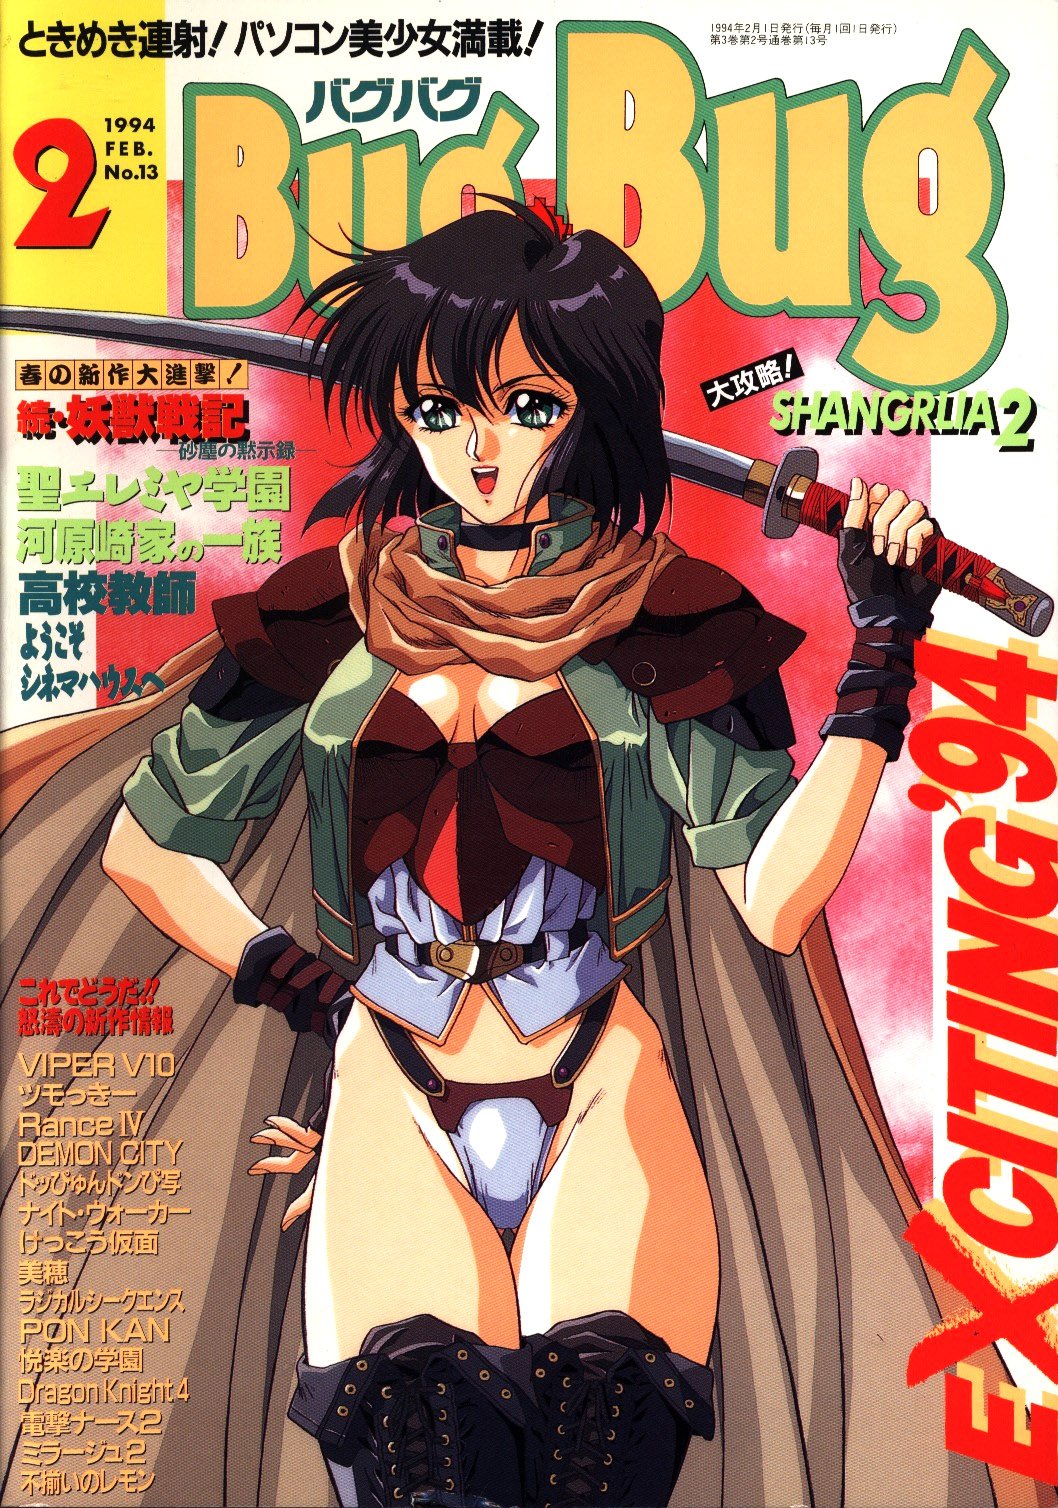 BugBug 013 (February 1994)